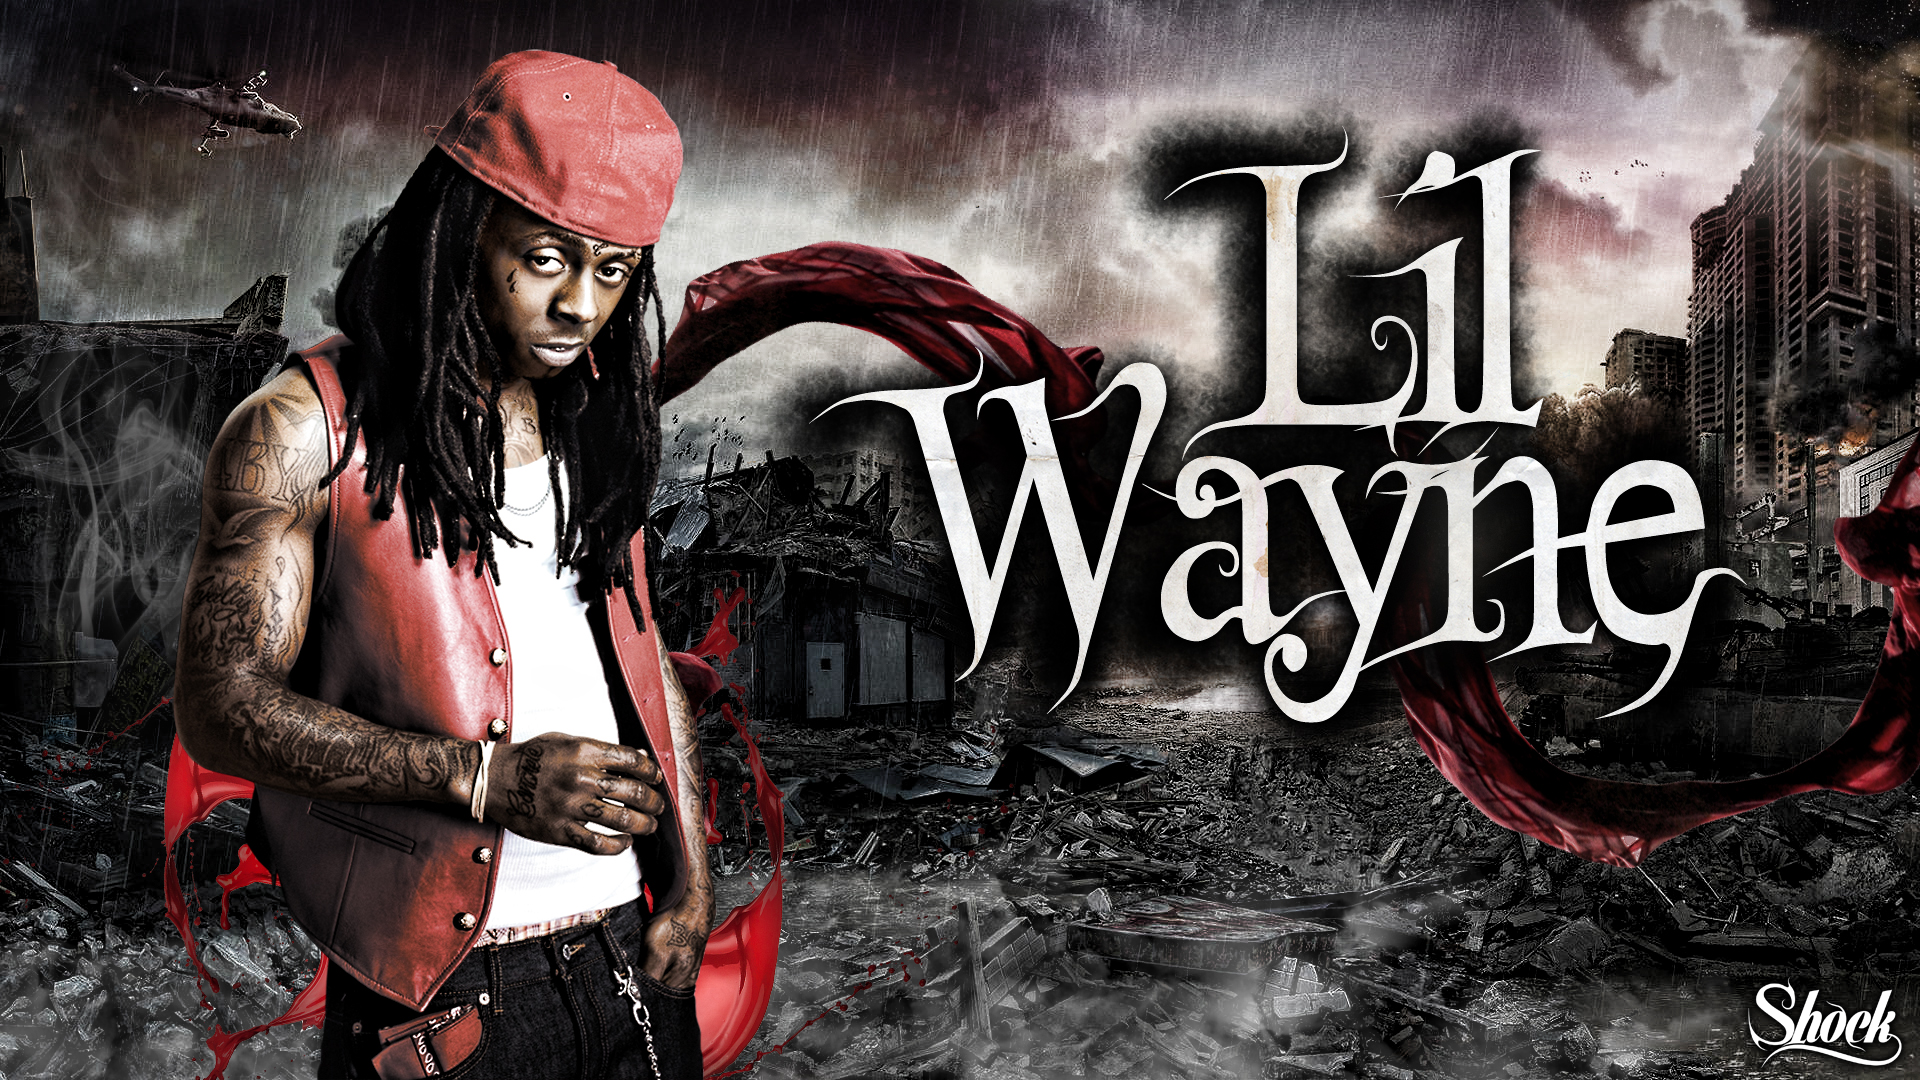 Lil Wayne HD Rap Wallpaper